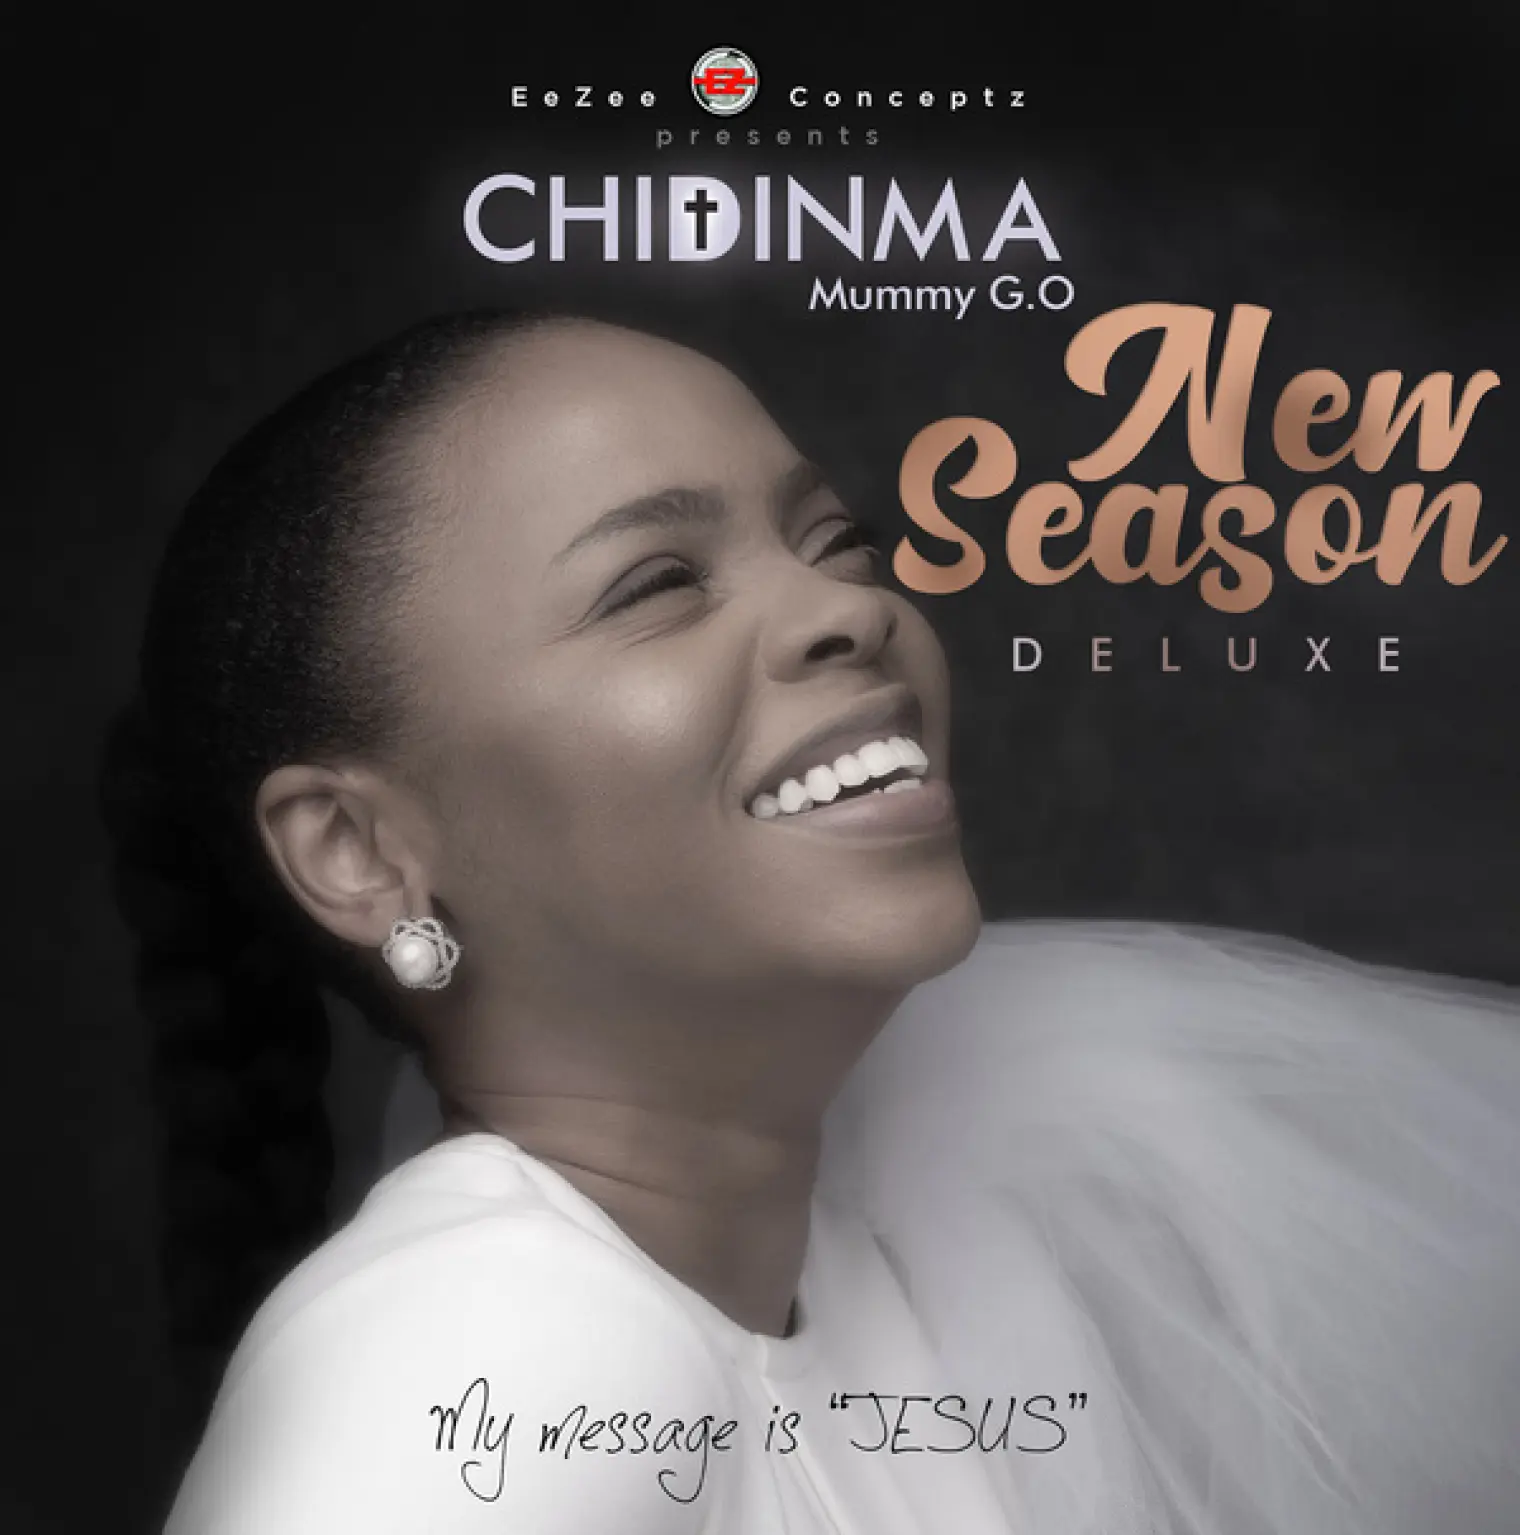 New Season (Deluxe) -  Chidinma 